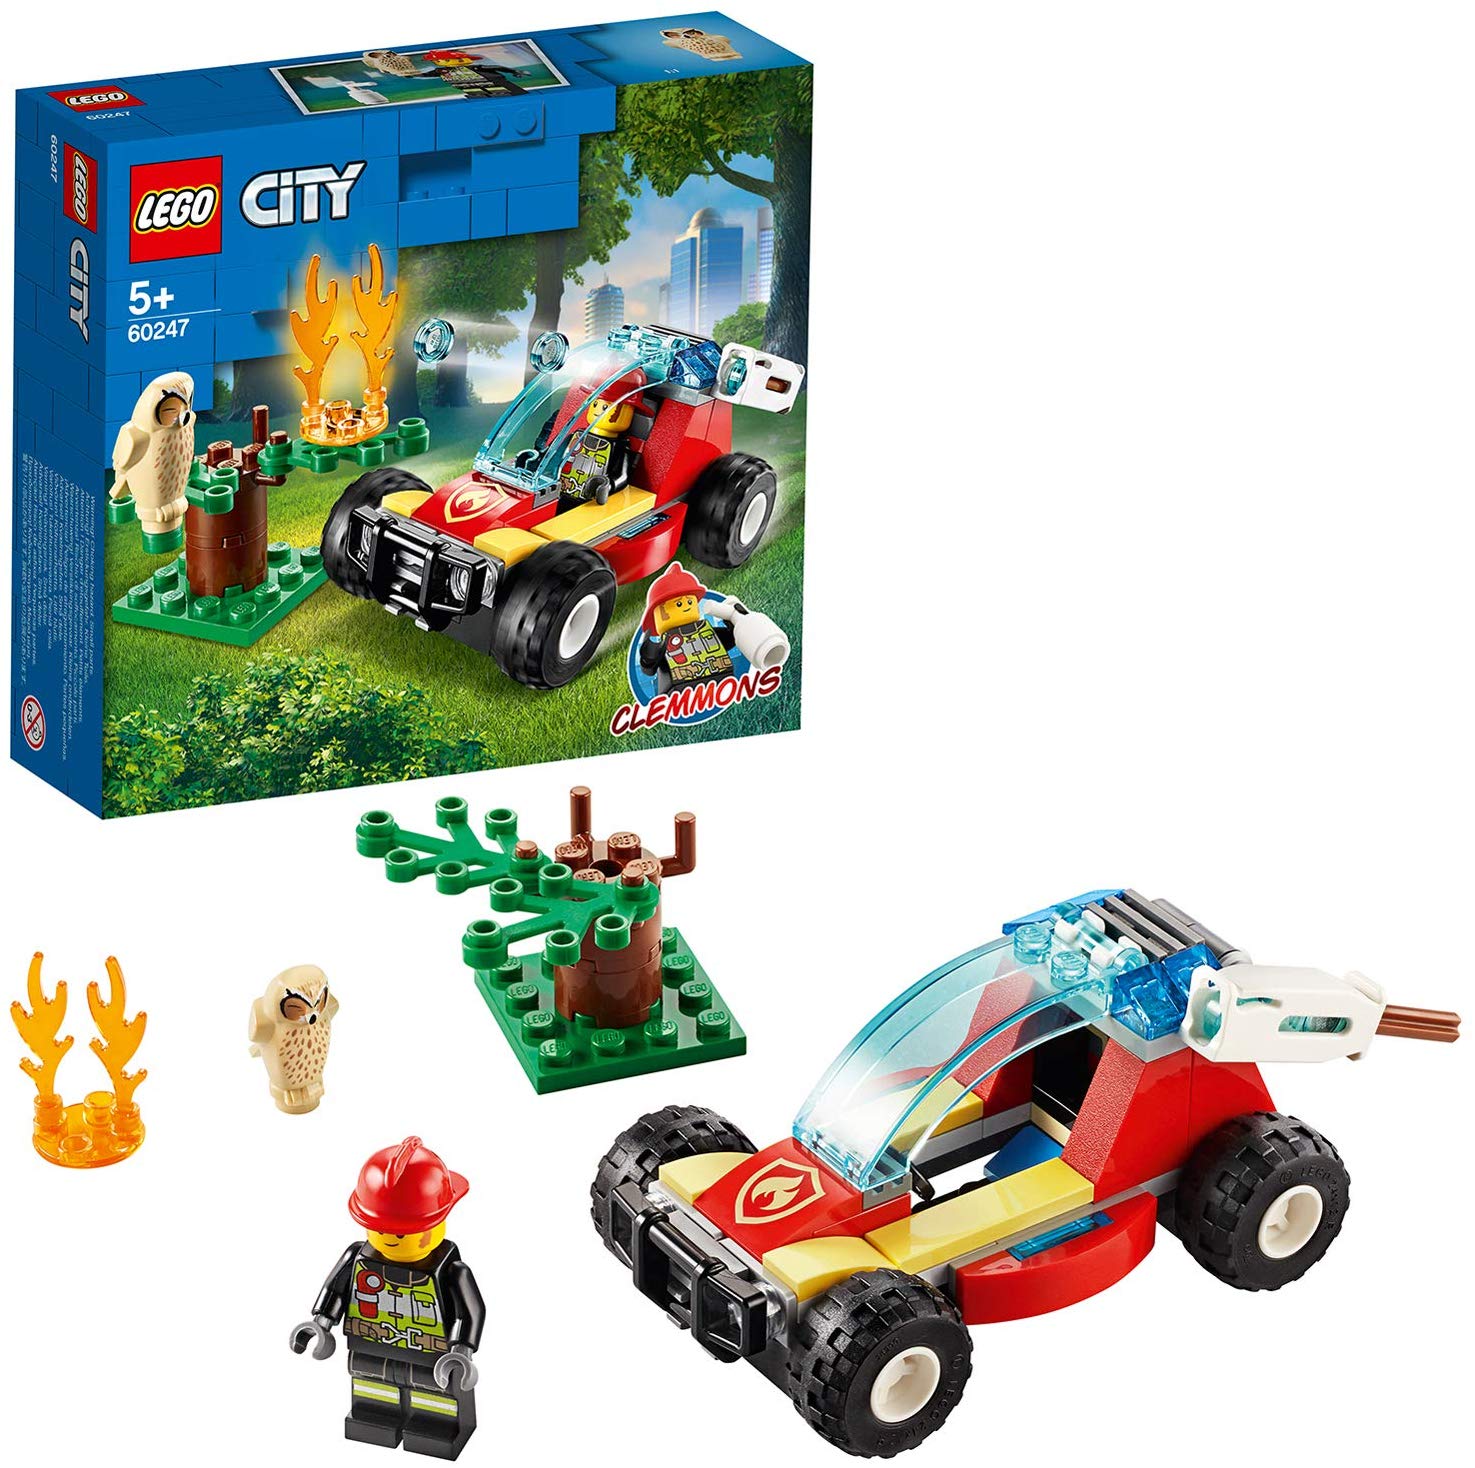 Lego 60247 Forest Brand, City, Construction Set